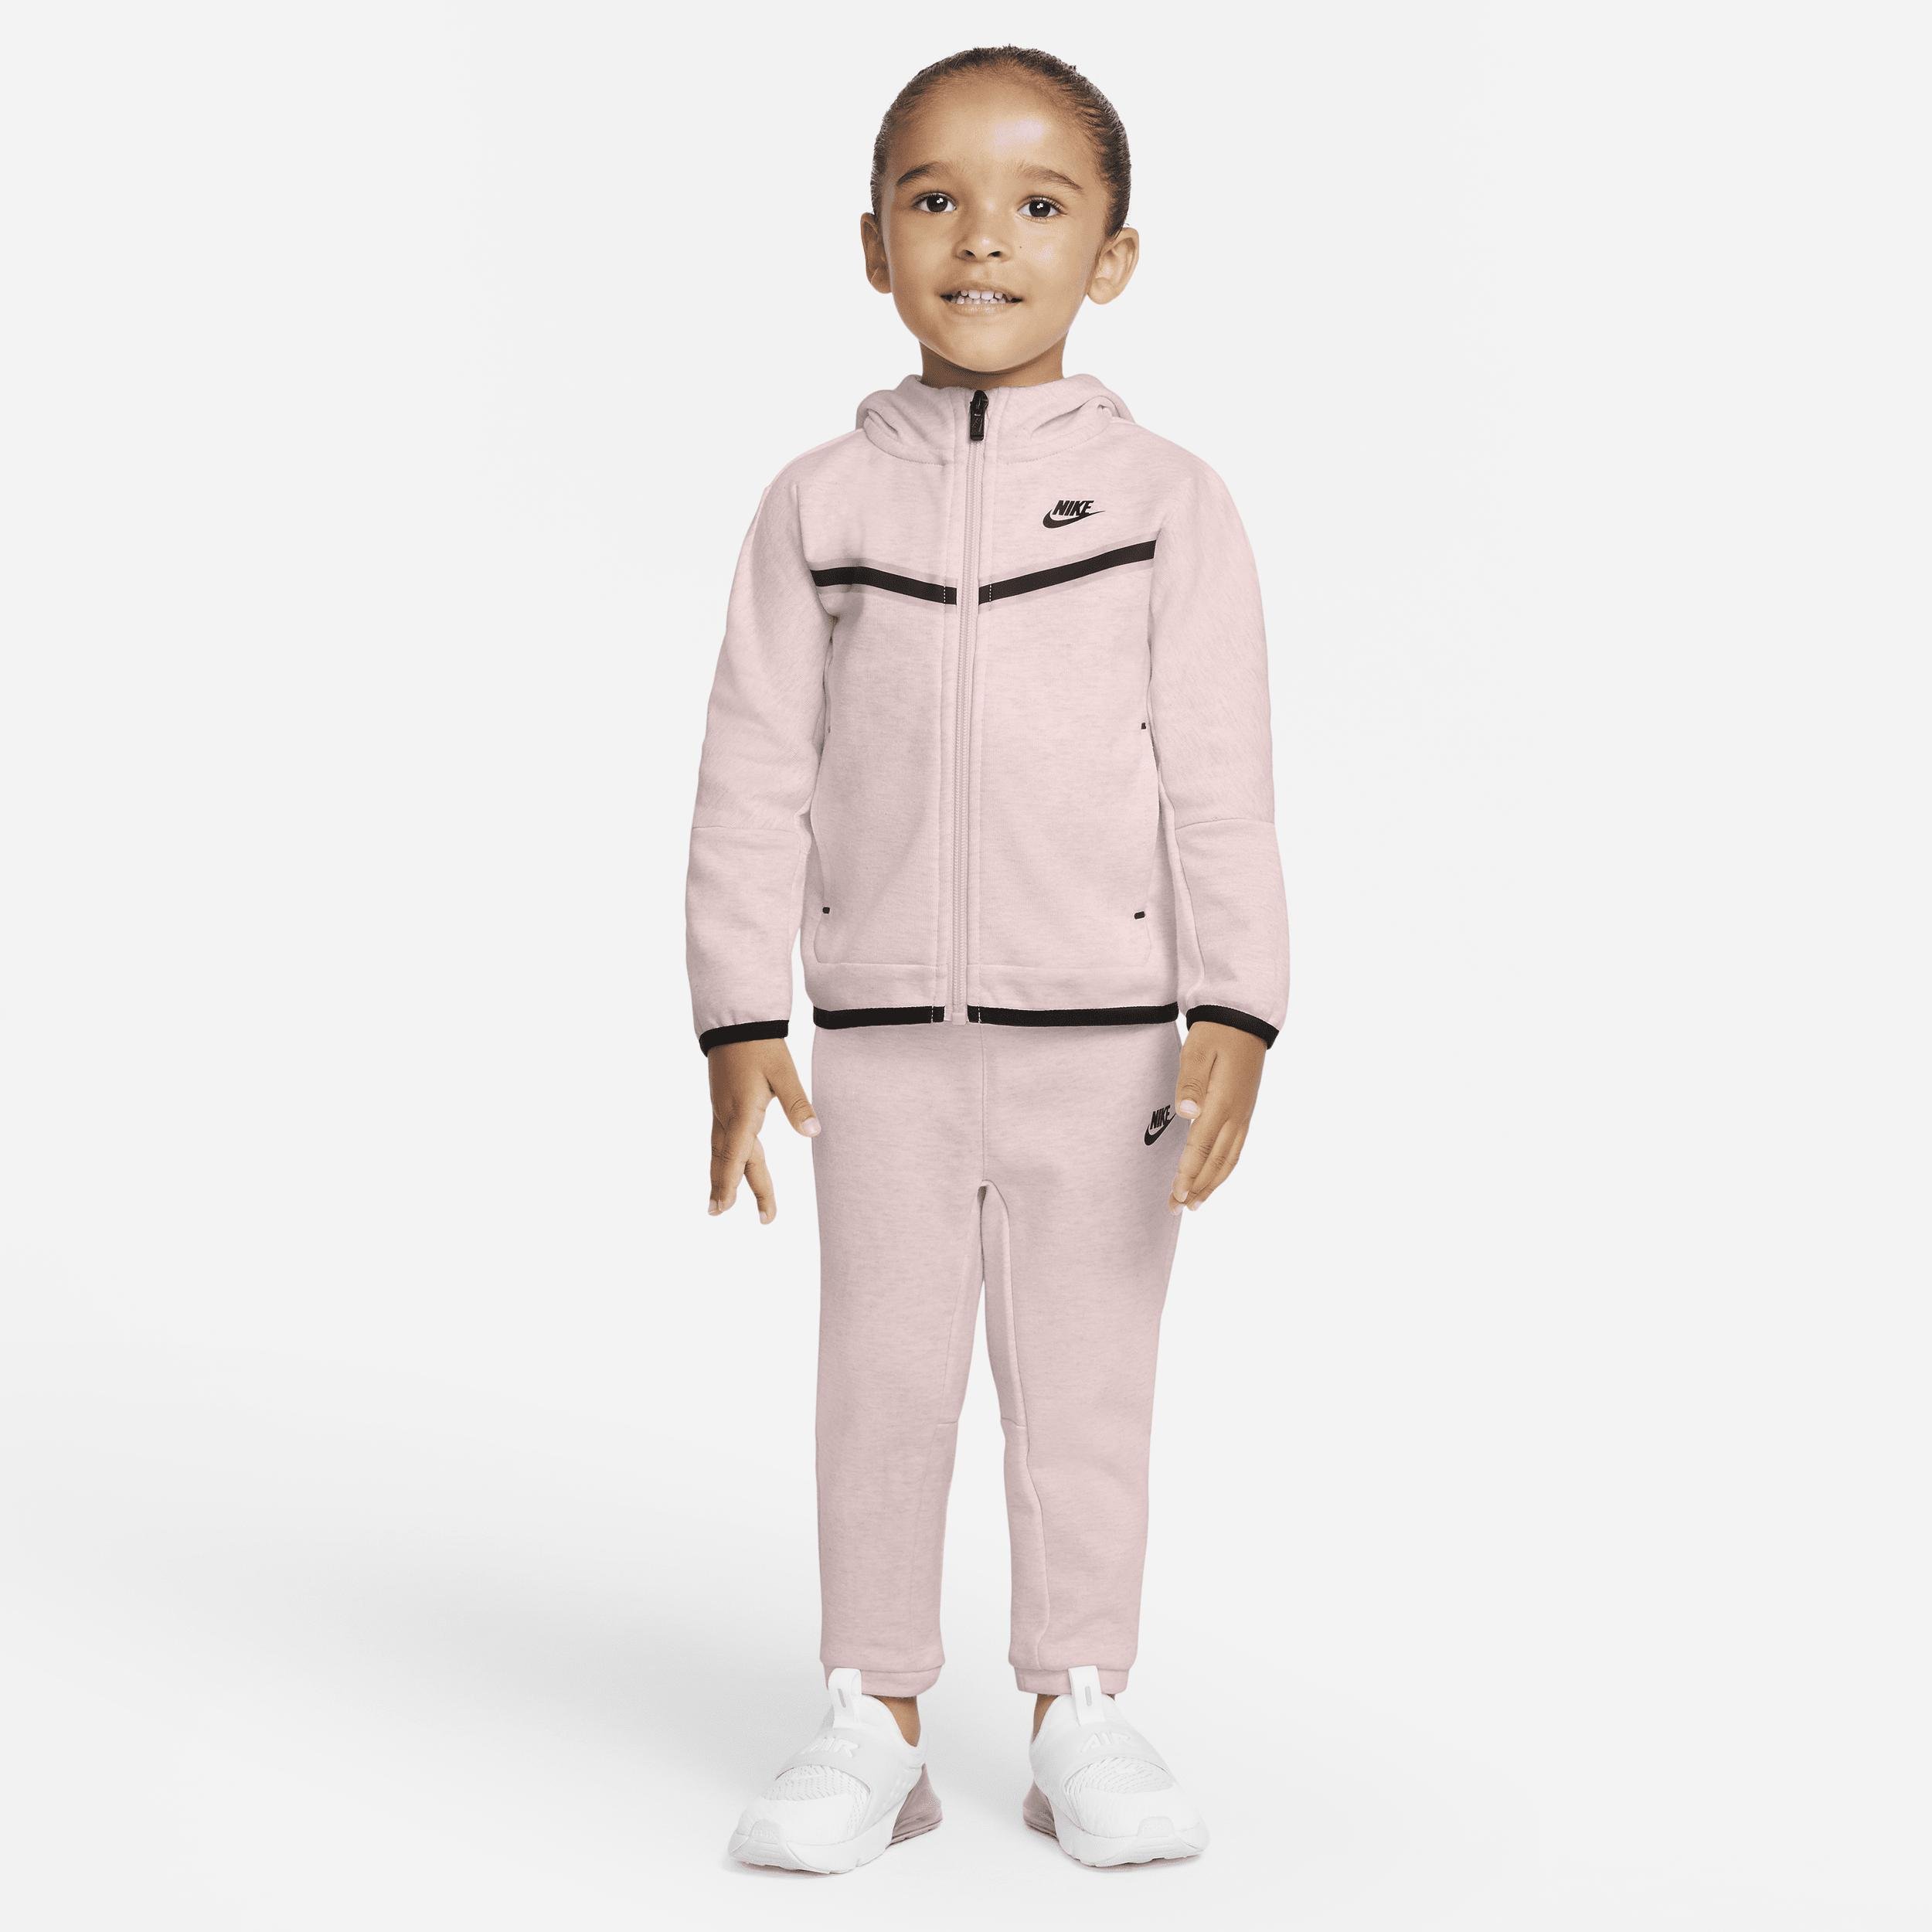 Nike Sportswear Tech Fleece Baby (12-24M) Zip Hoodie and Pants Set by NIKE